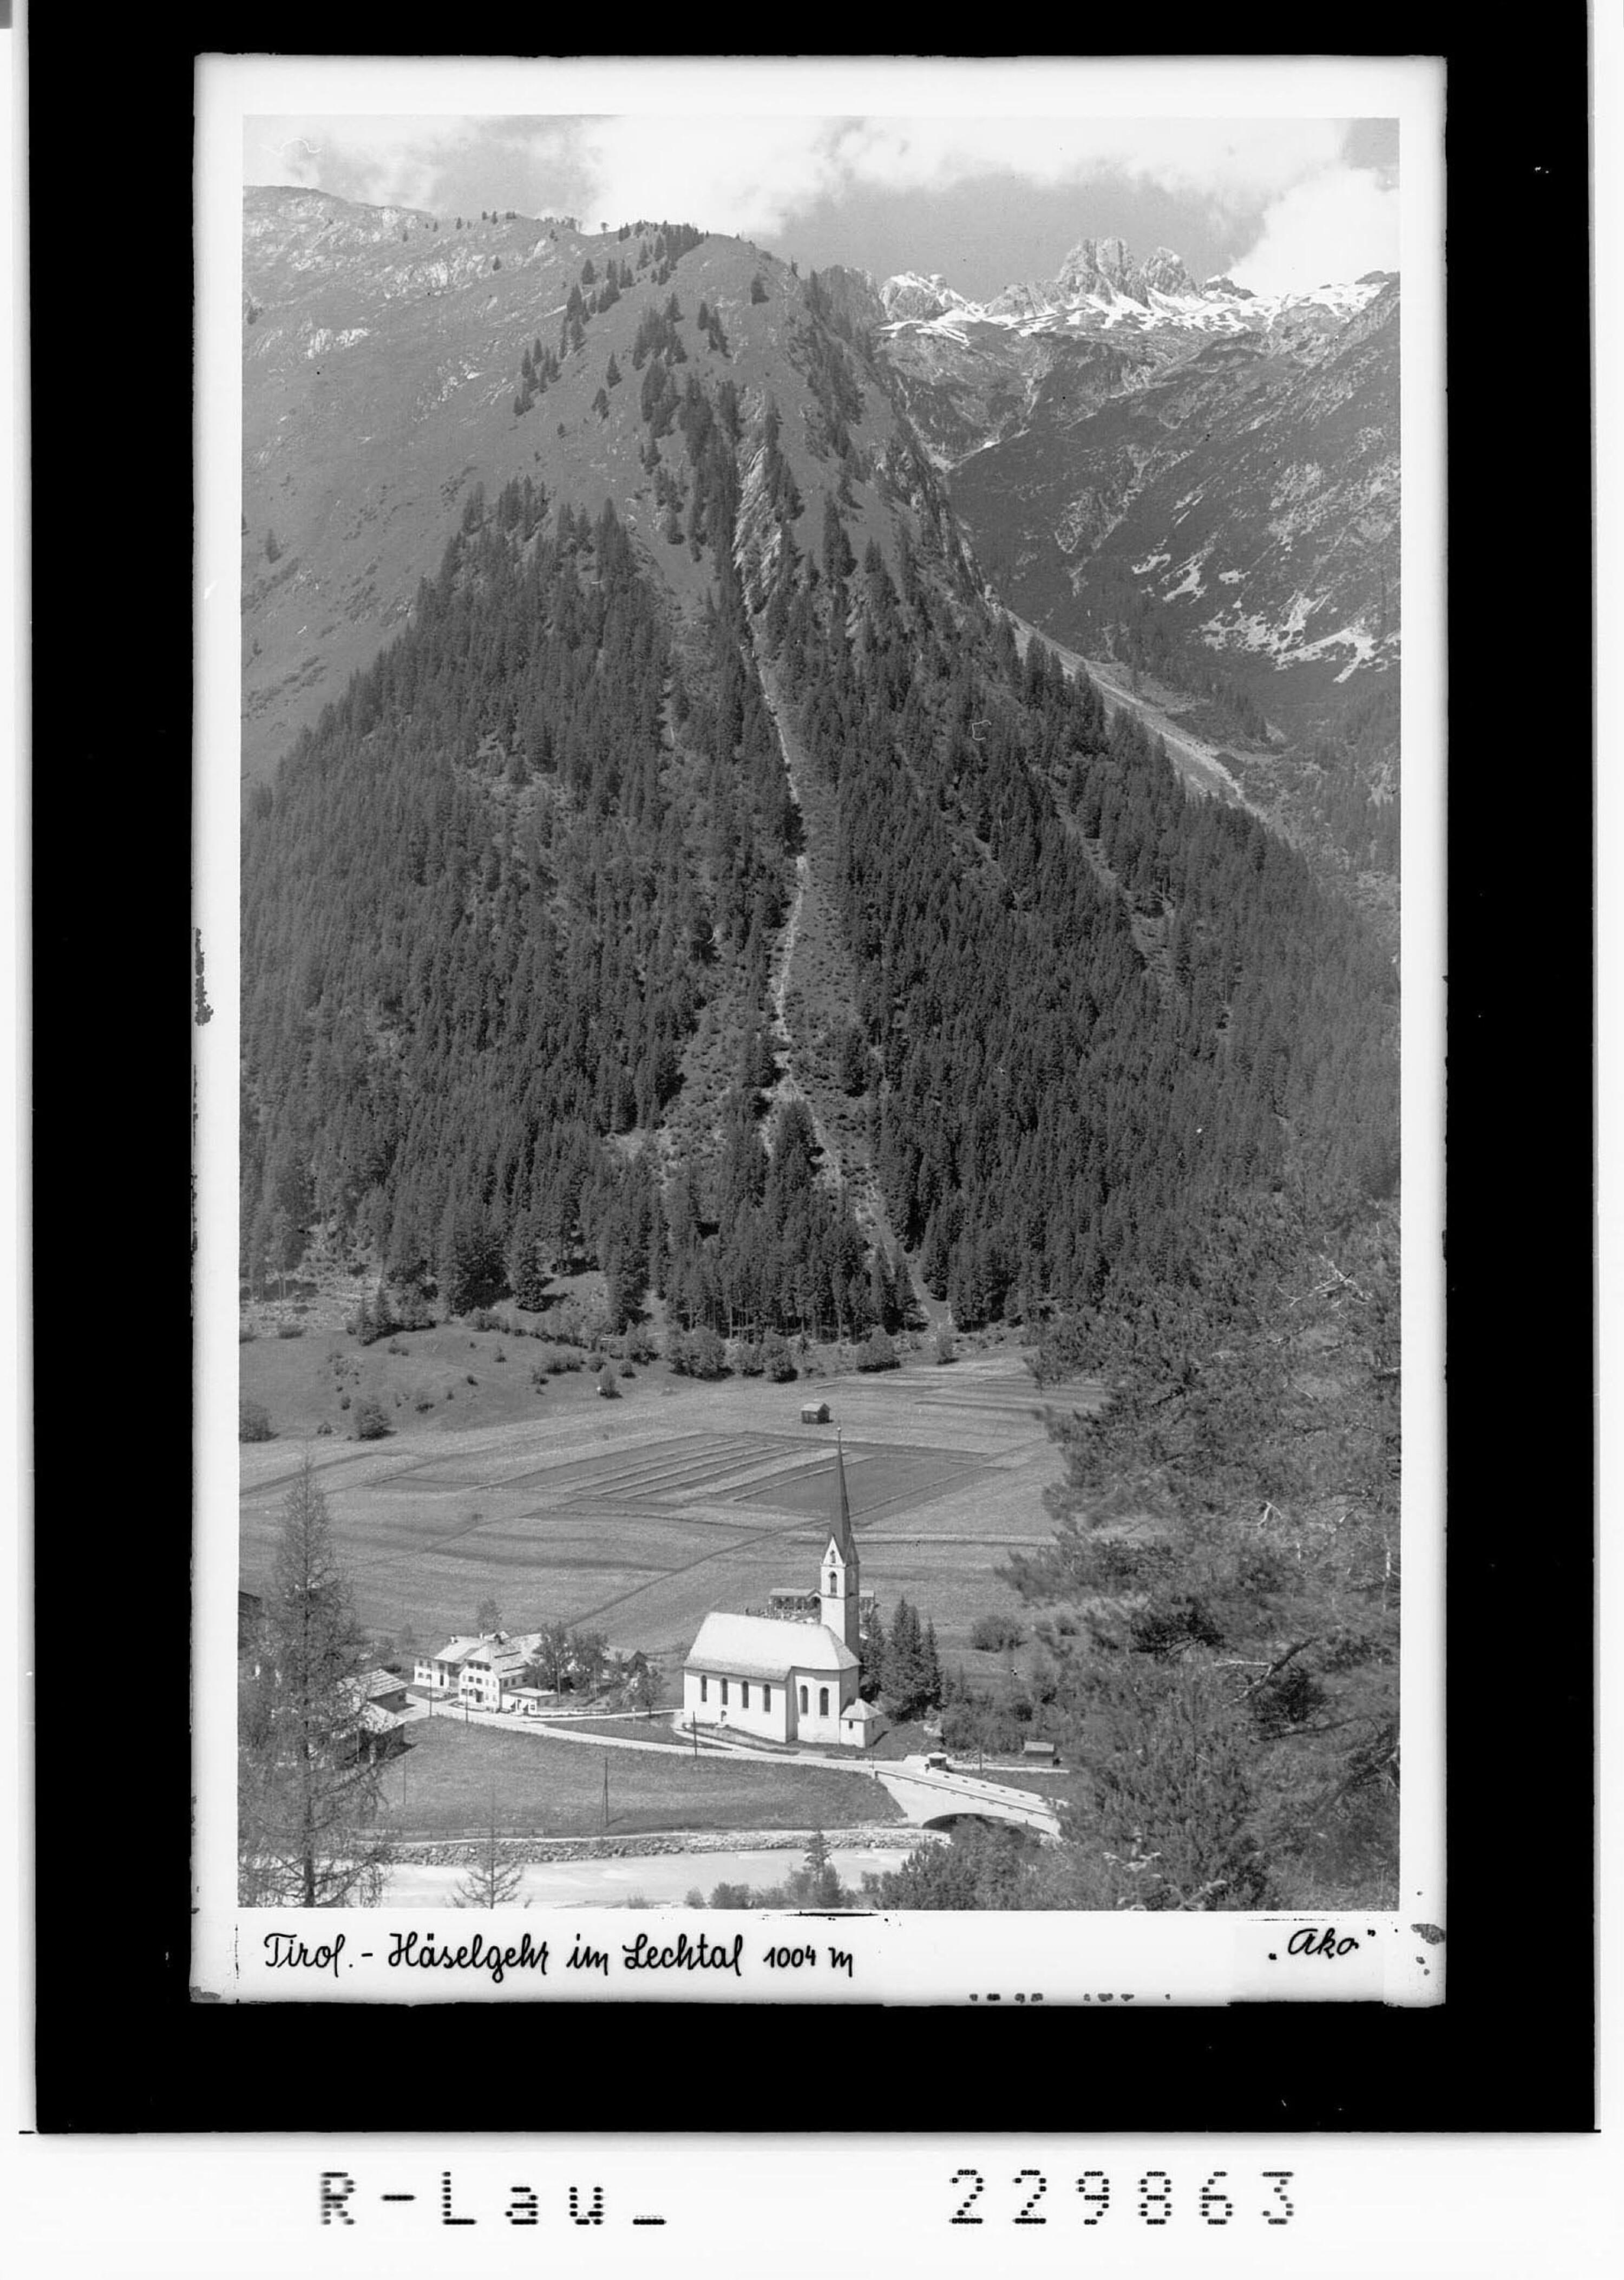 Tirol / Häselgehr im Lechtal 1004 m></div>


    <hr>
    <div class=